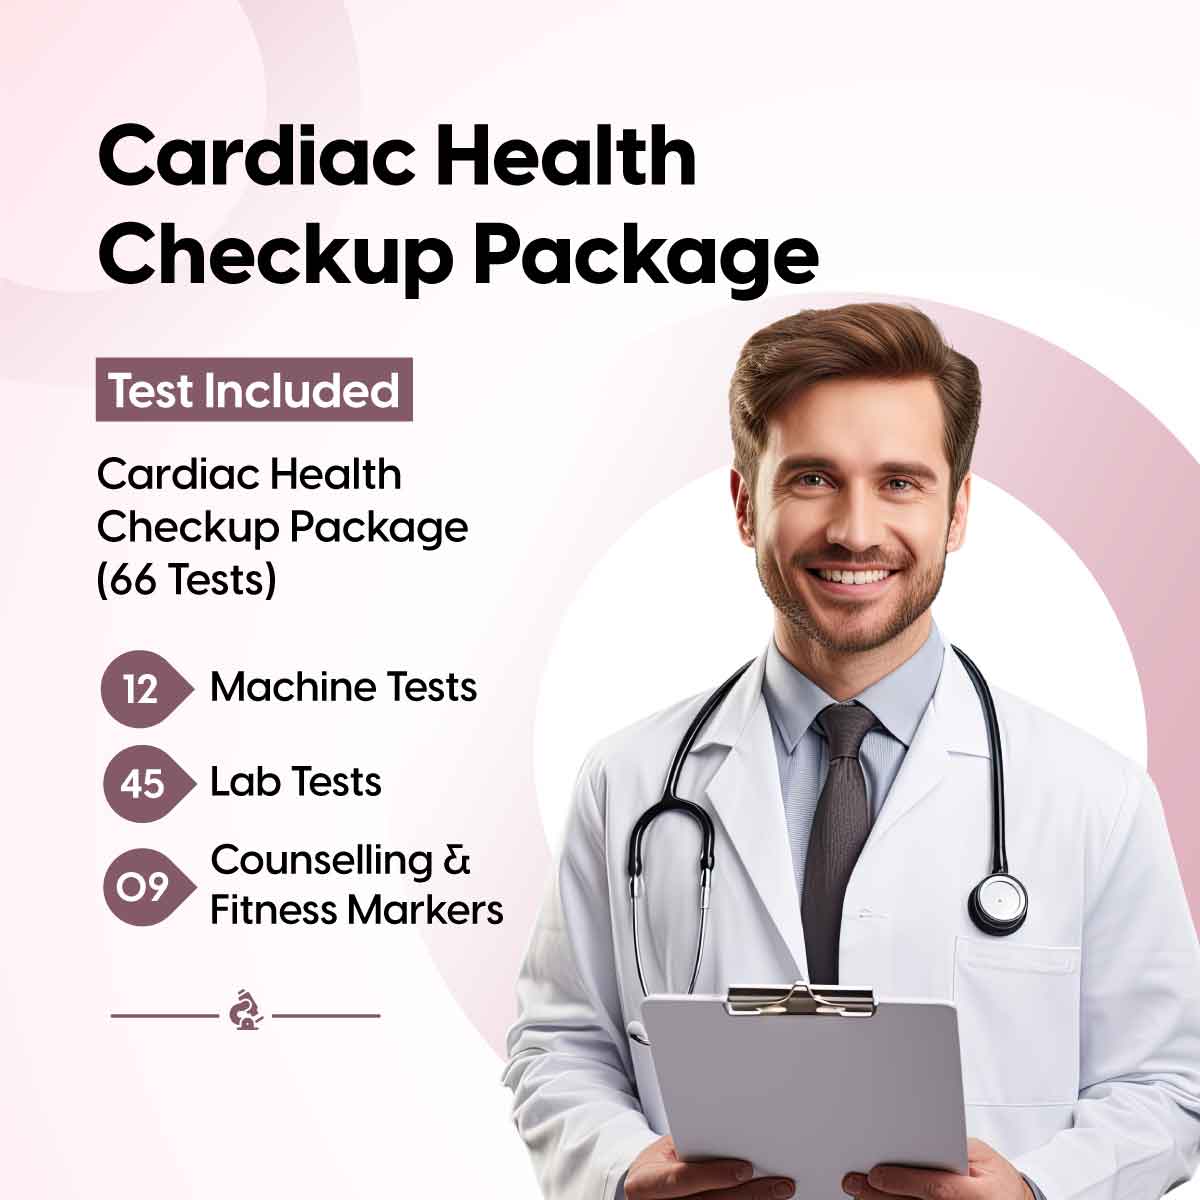 Cardiac Health Checkup Package